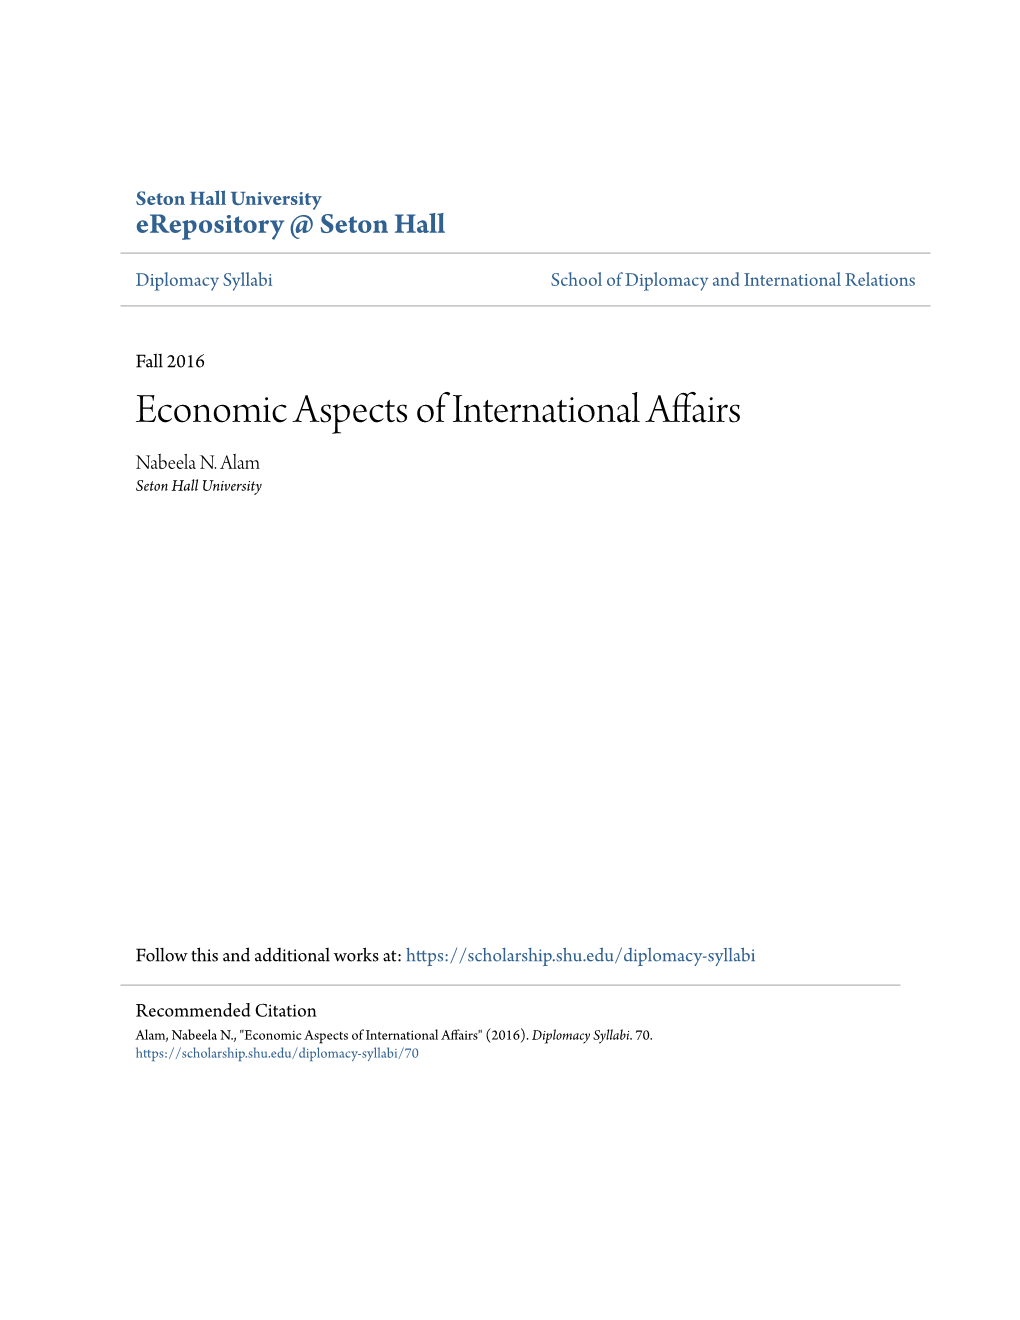 Economic Aspects of International Affairs Nabeela N